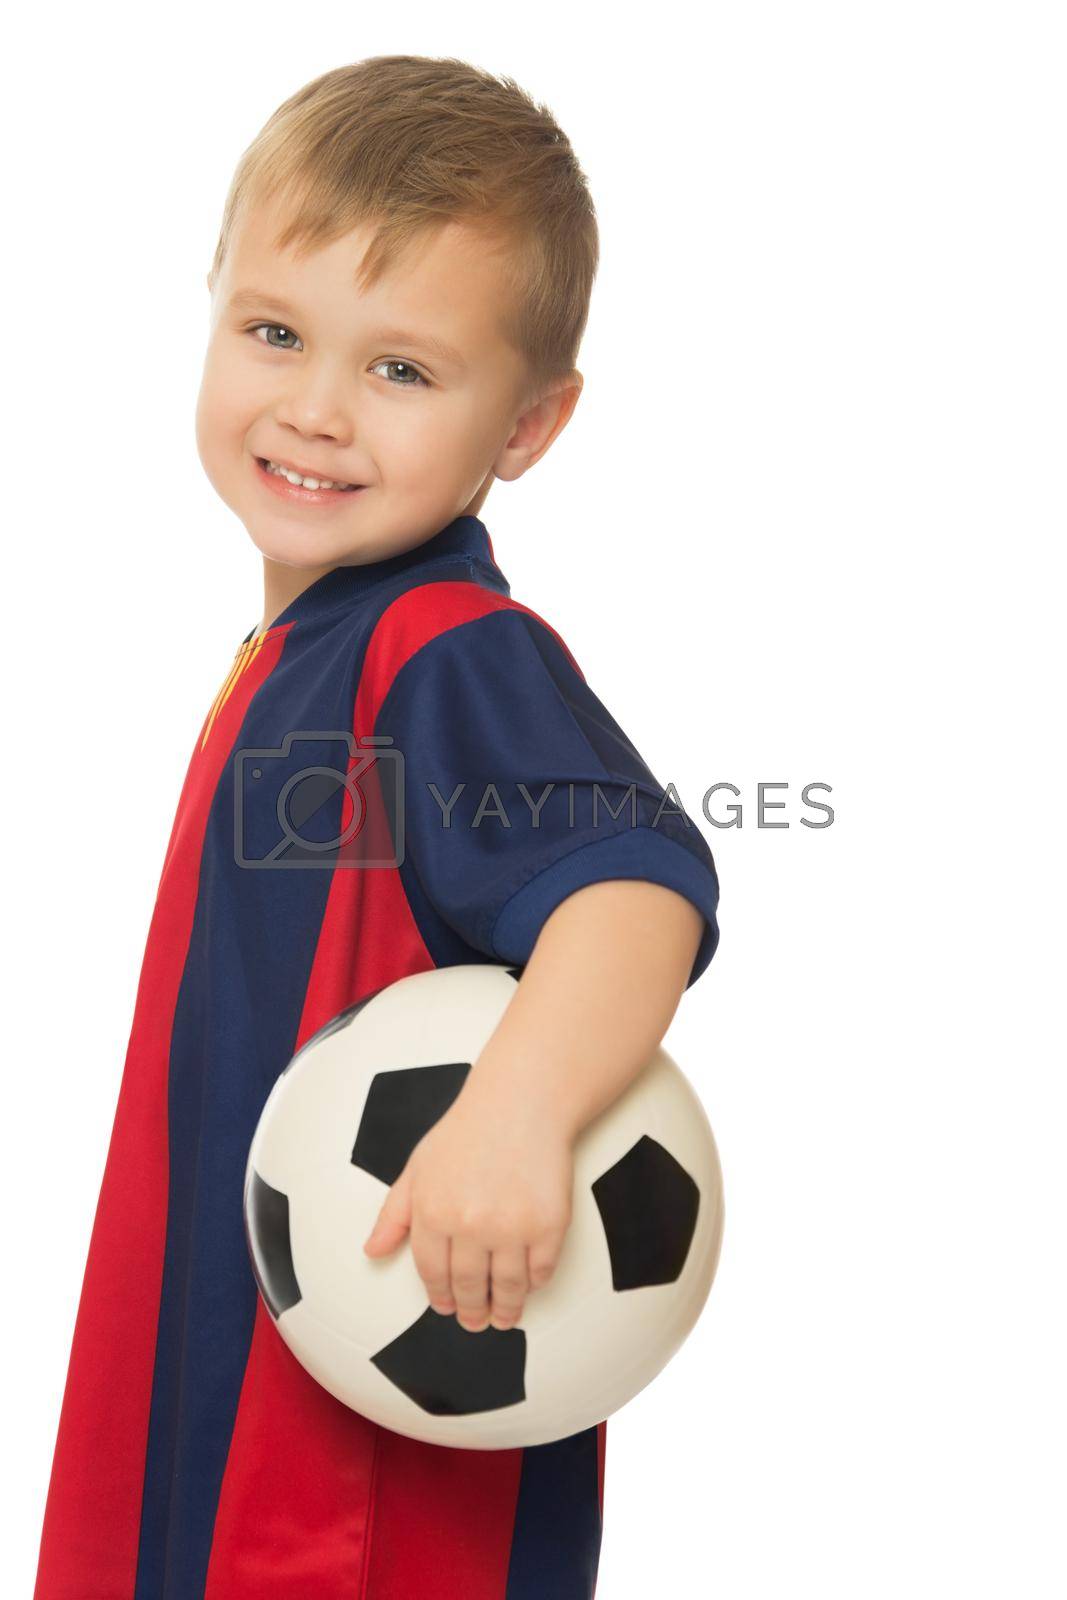 Royalty free image of Little boy with soccer ball by kolesnikov_studio